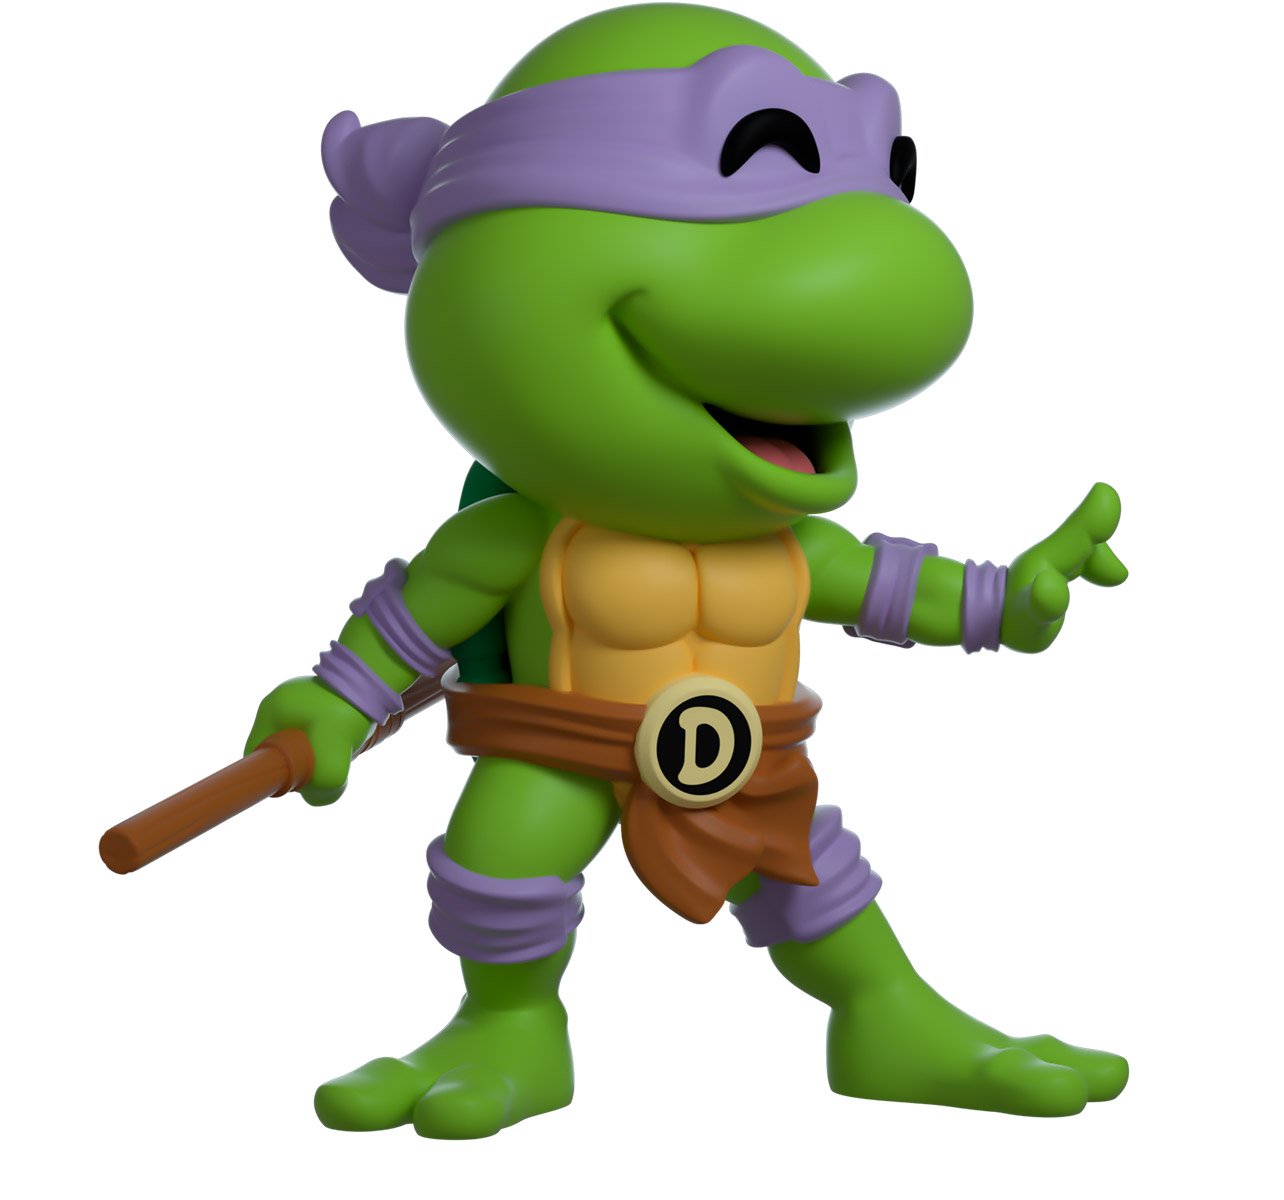 Donatello Youtooz Teenage Mutant Ninja Turtles Vinyl figurine Donatello (Classic)